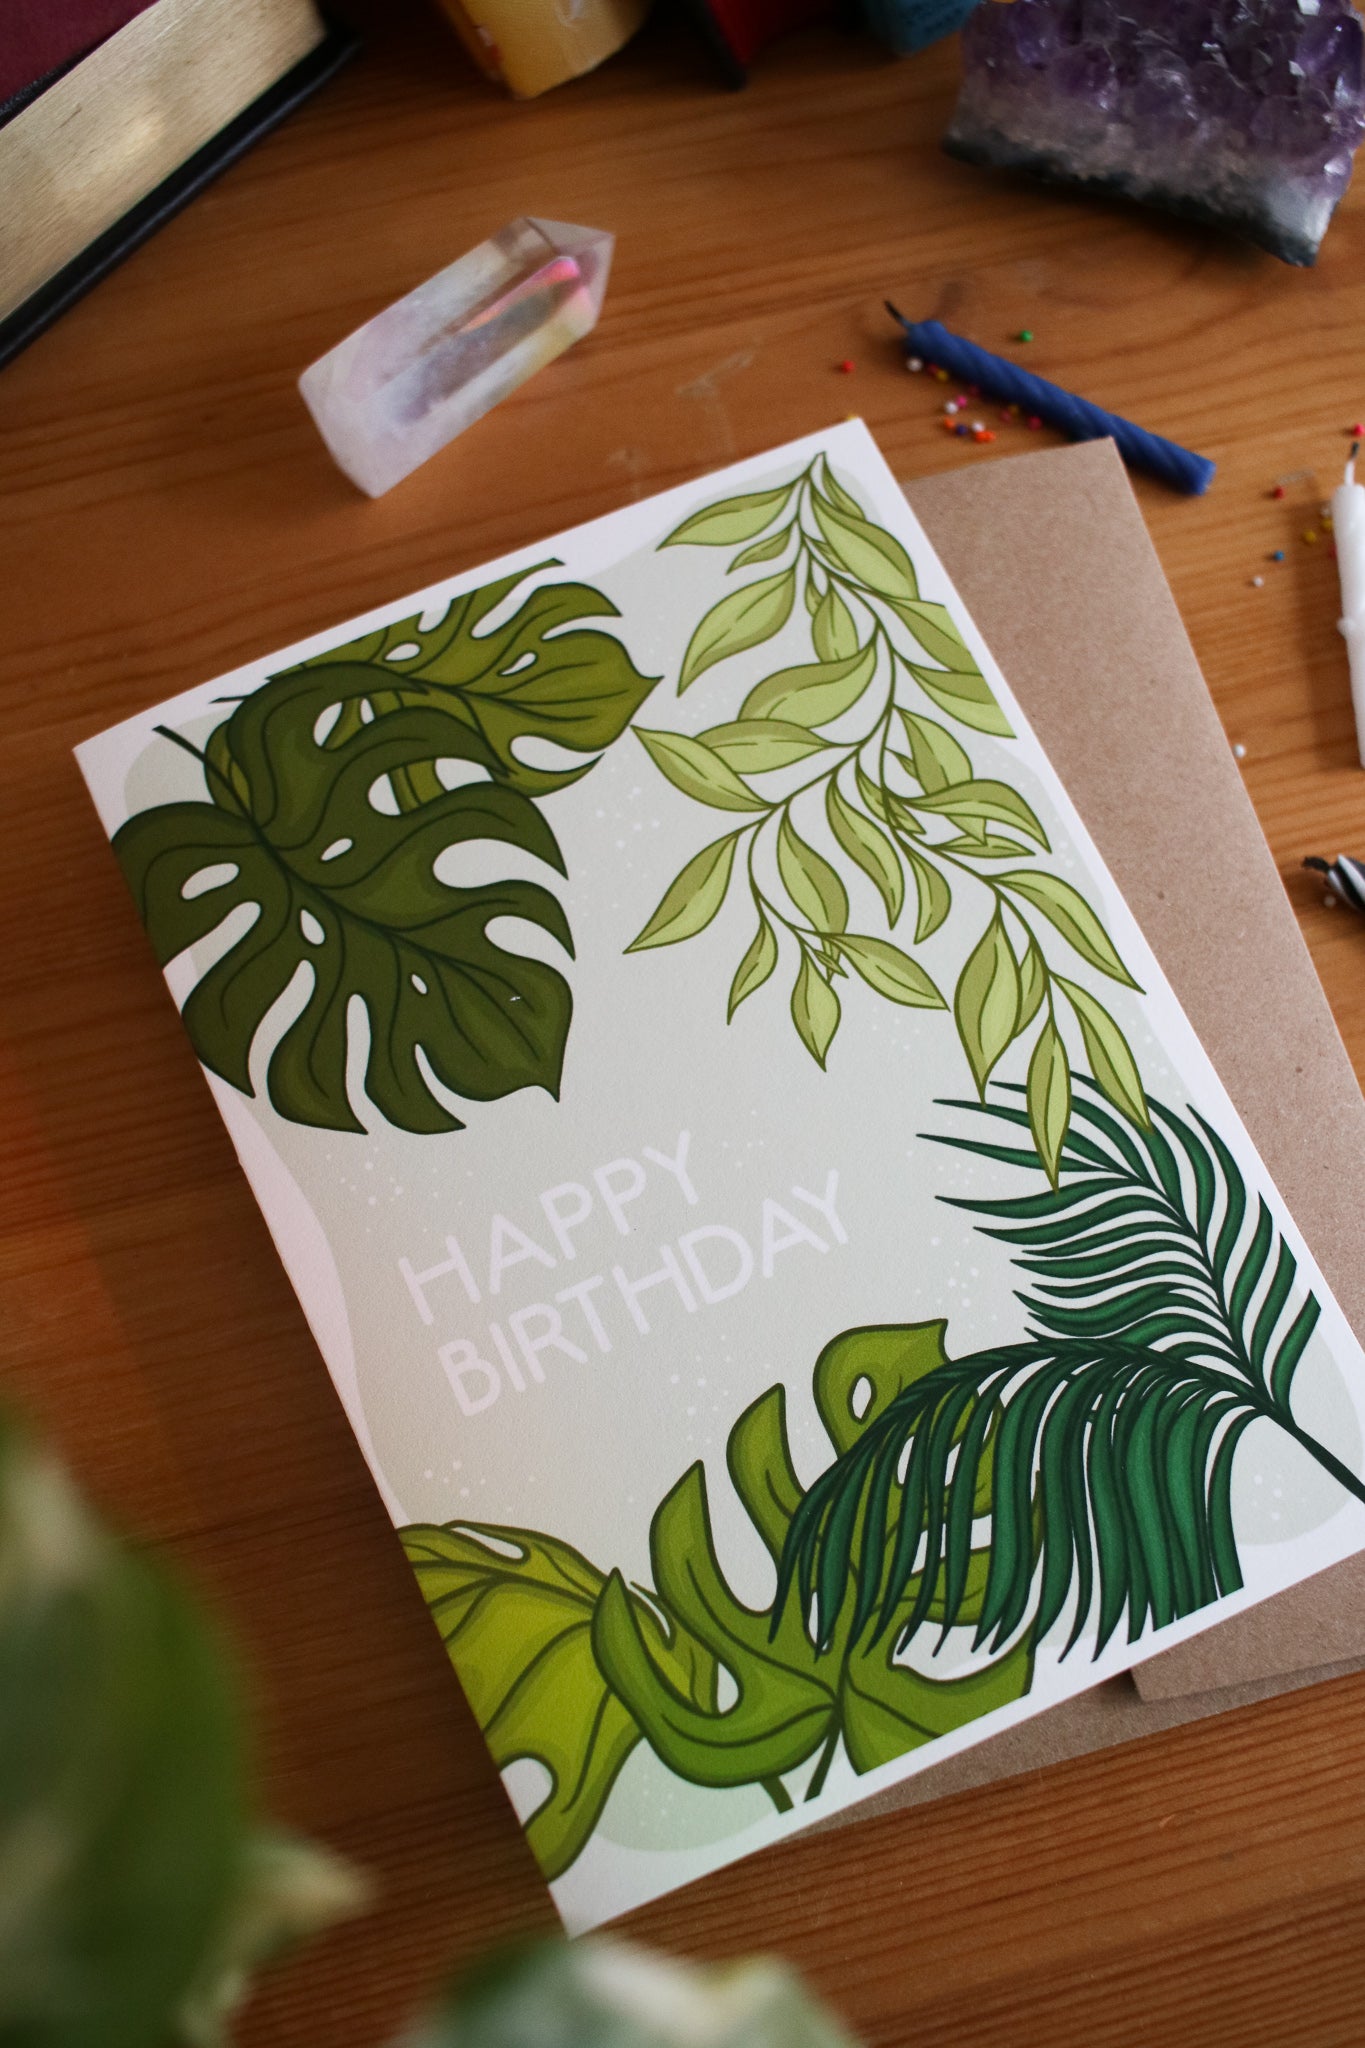 Happy Birthday - Plant Lover - Greeting Card